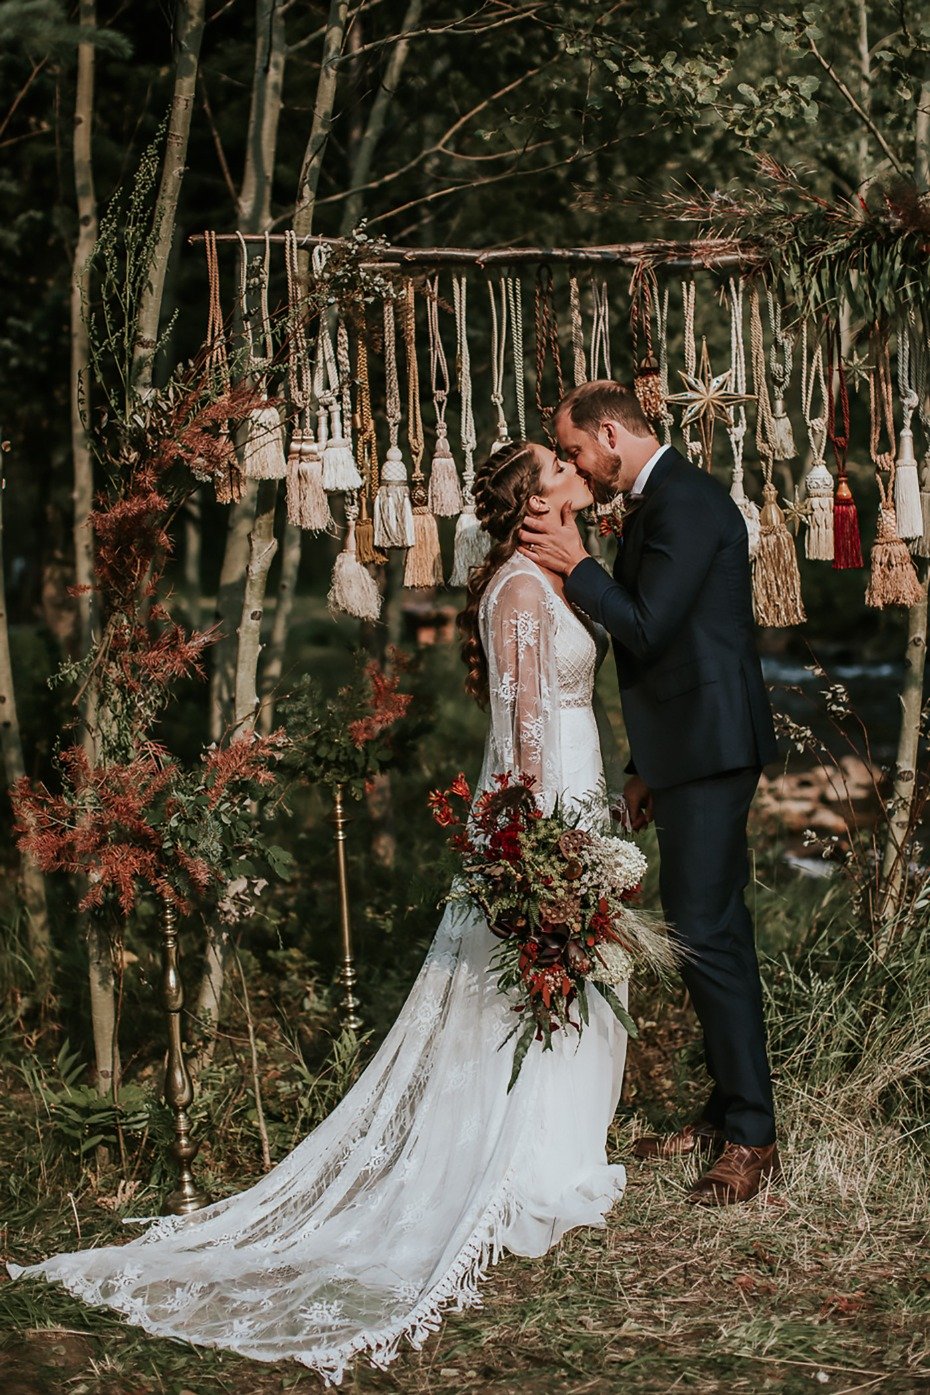 Rustic forest wedding with a vintage tassel wedding backdrop